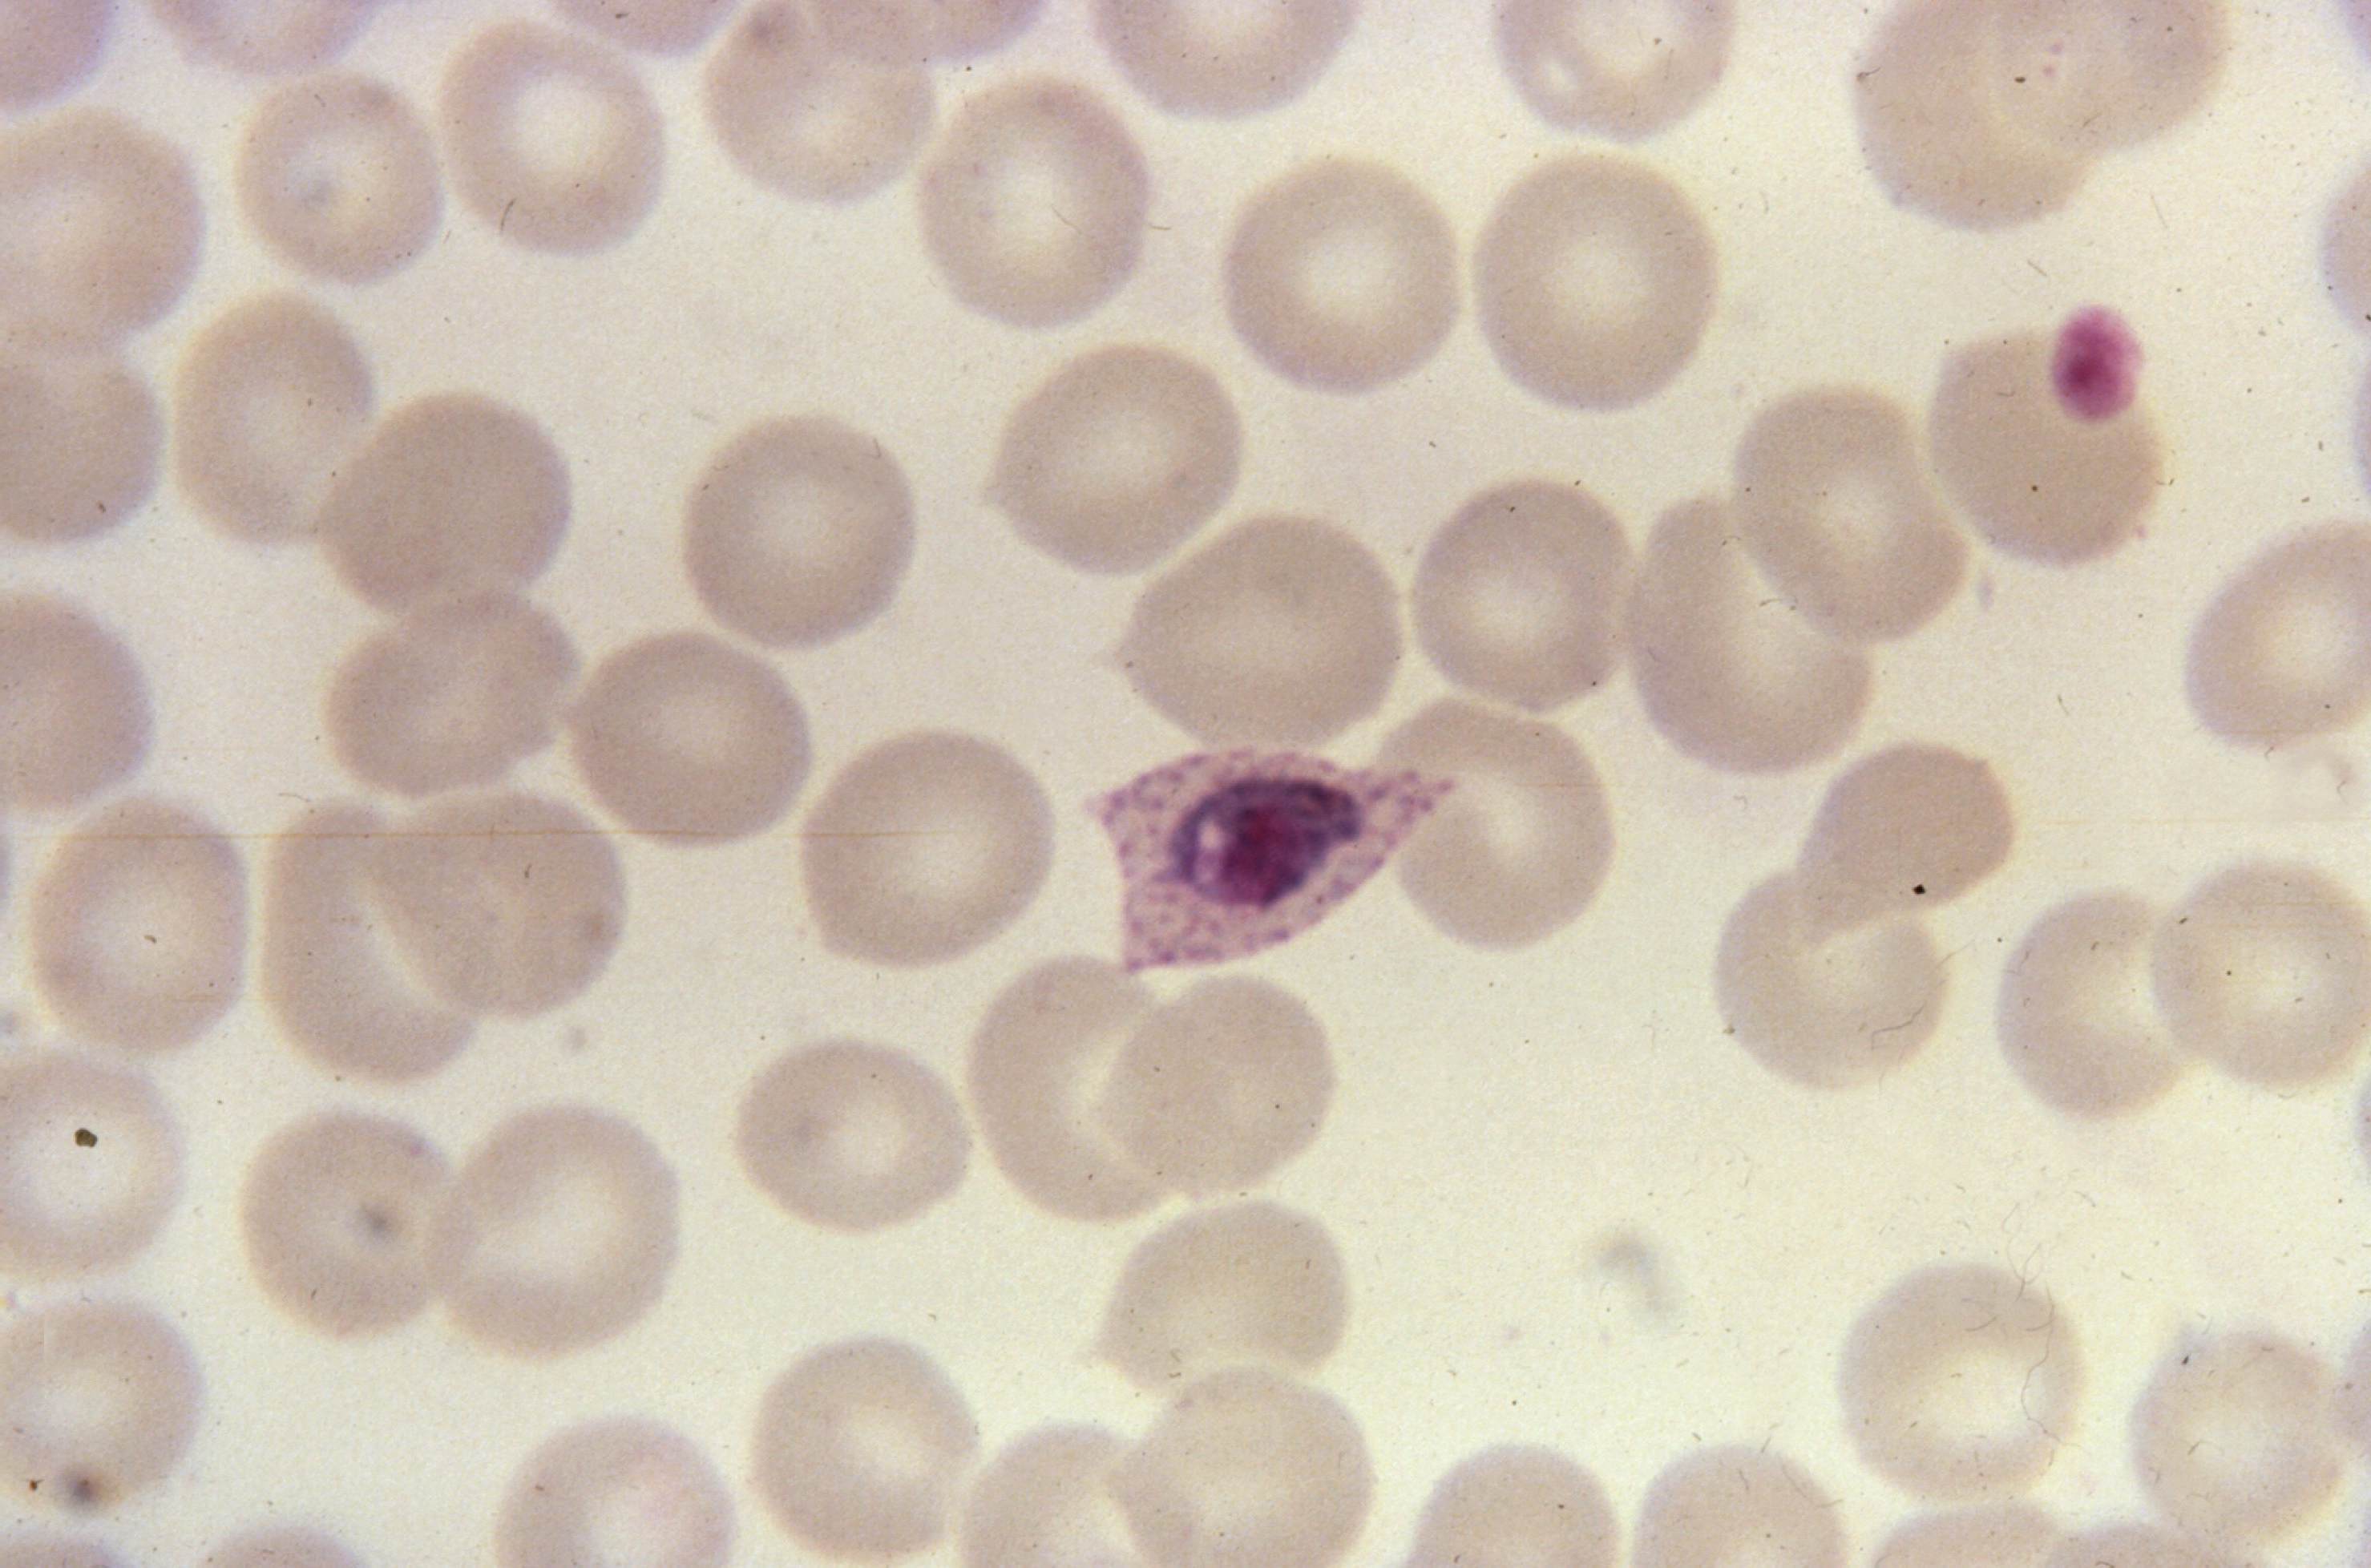 Free picture: blood smear, photomicrograph, growing, plasmodium ovale, trophozoite ...2958 x 1956